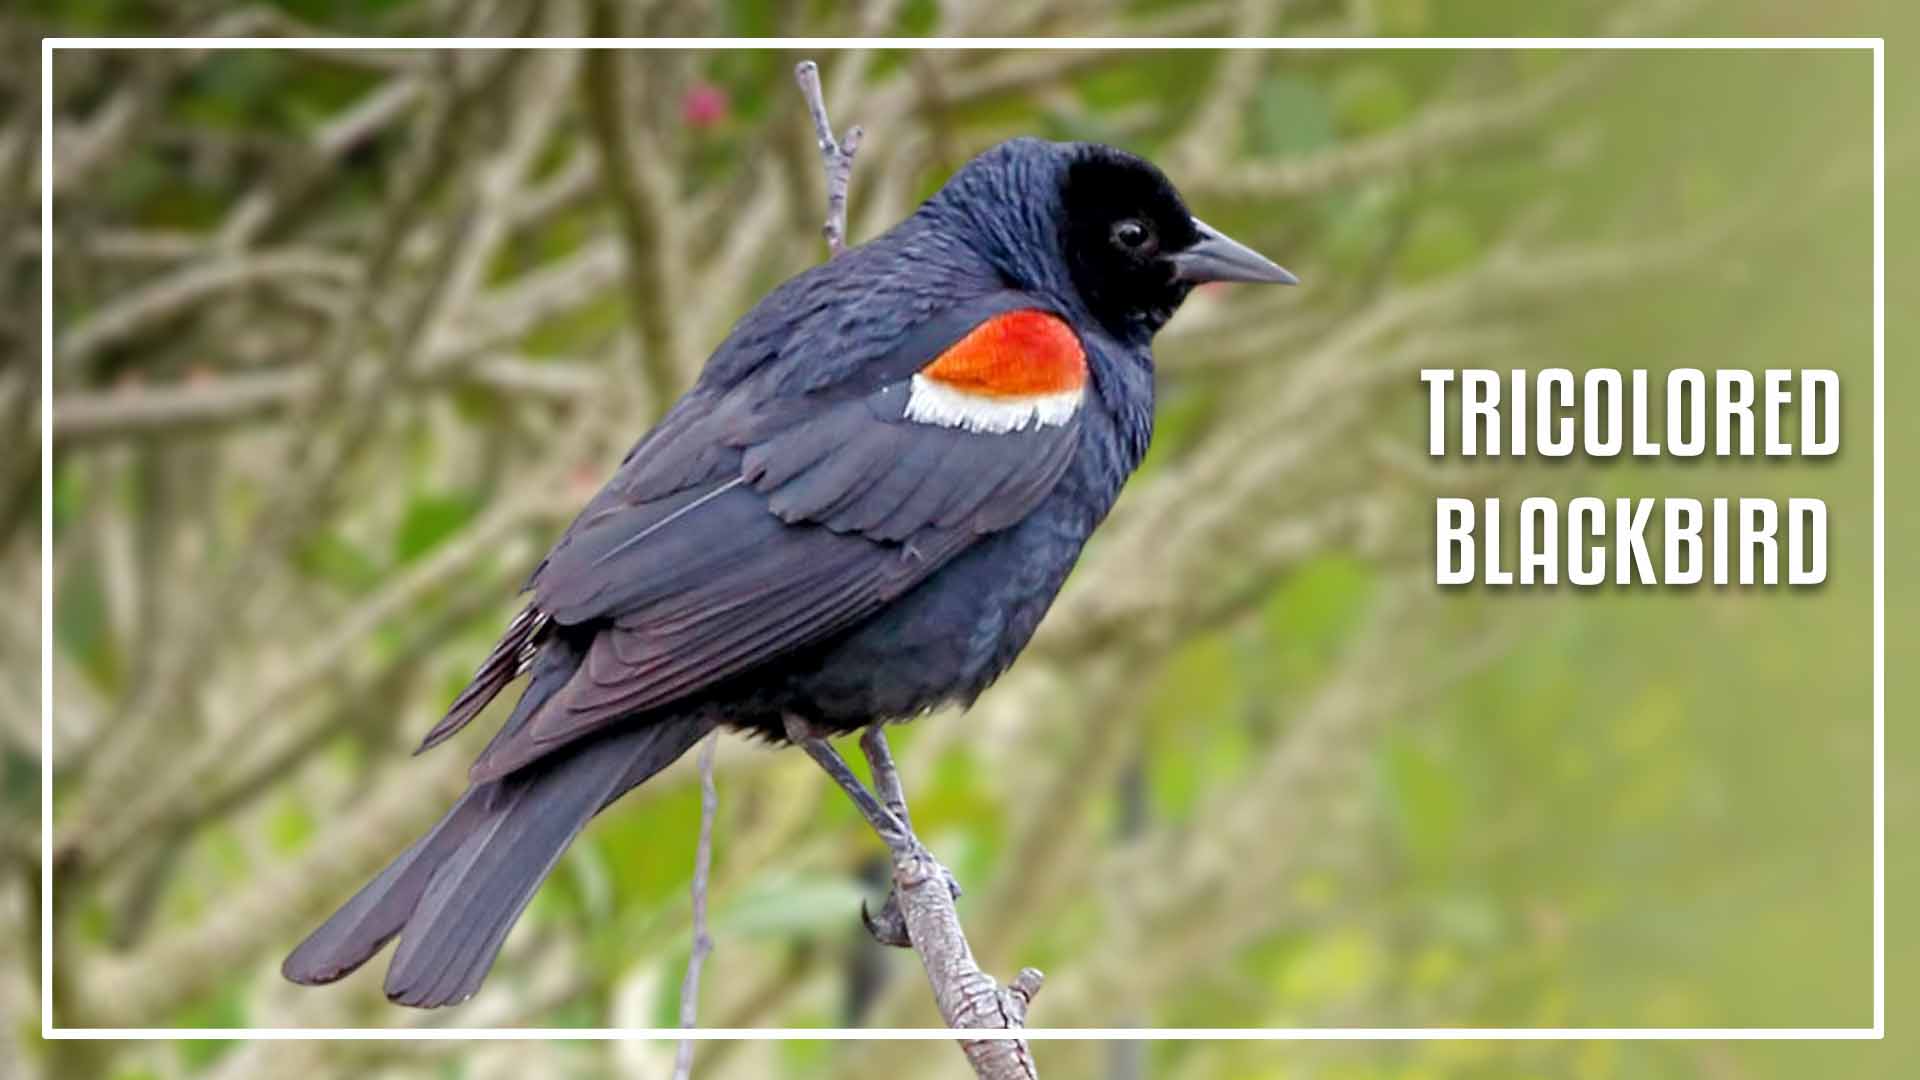 Tricolored Blackbird is a black bird with orange stripe on wings